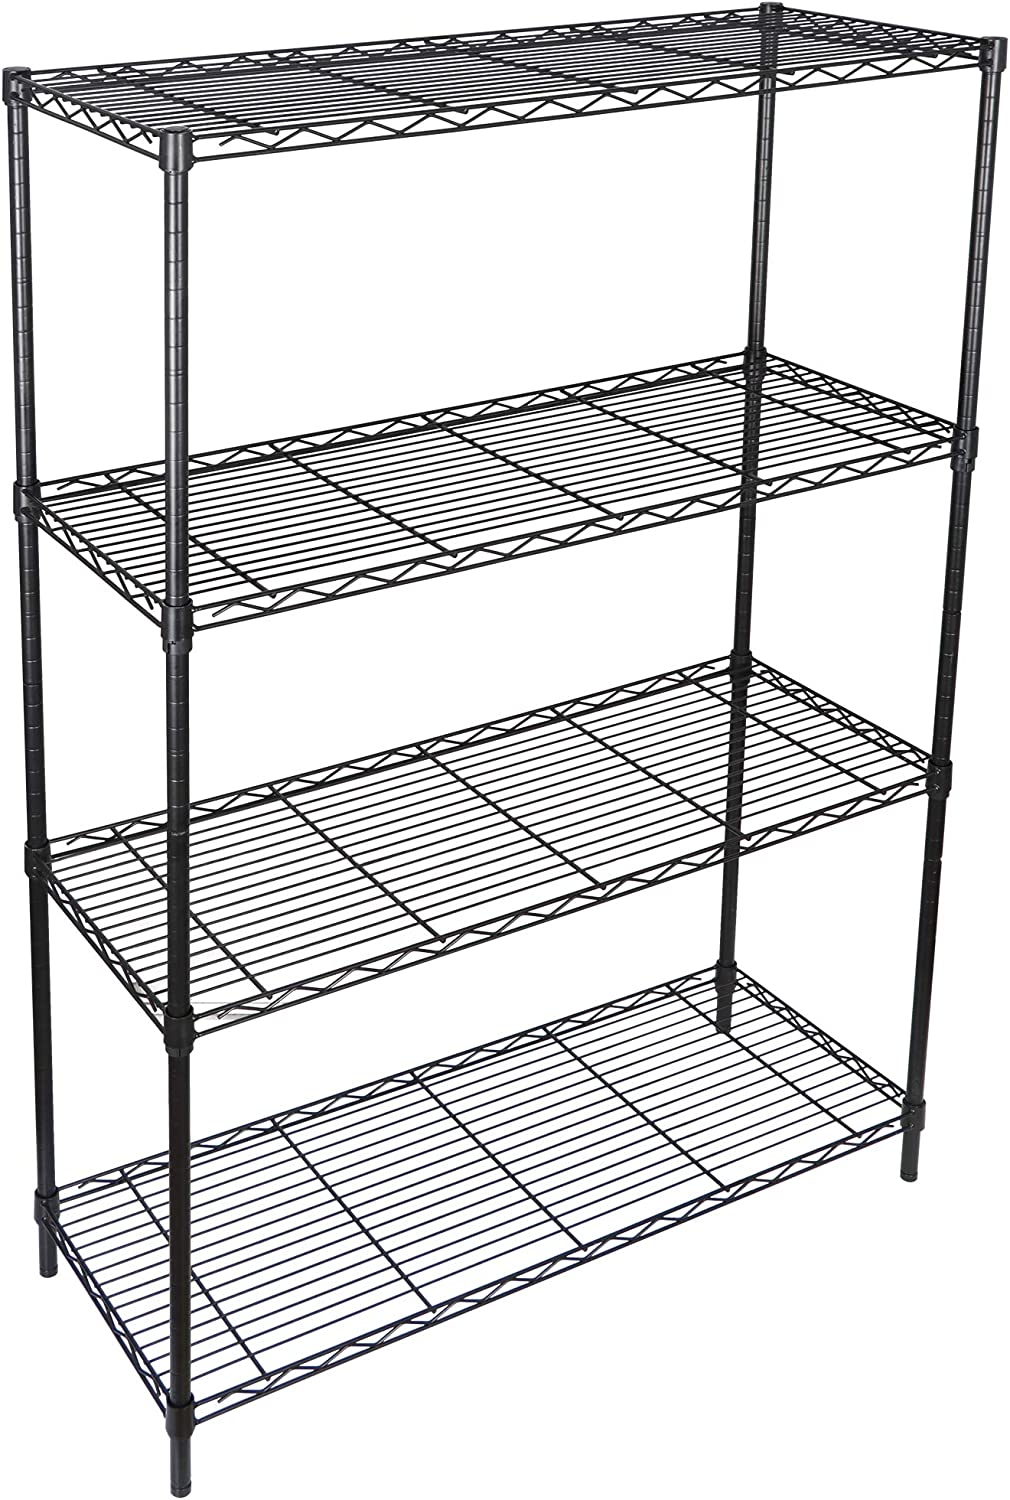 4-Shelf Adjustable, Heavy Duty Storage Shelving Unit, Steel Organizer Wire Rack, Storage Rack with Leveling Feet for Kitchen Office Garage